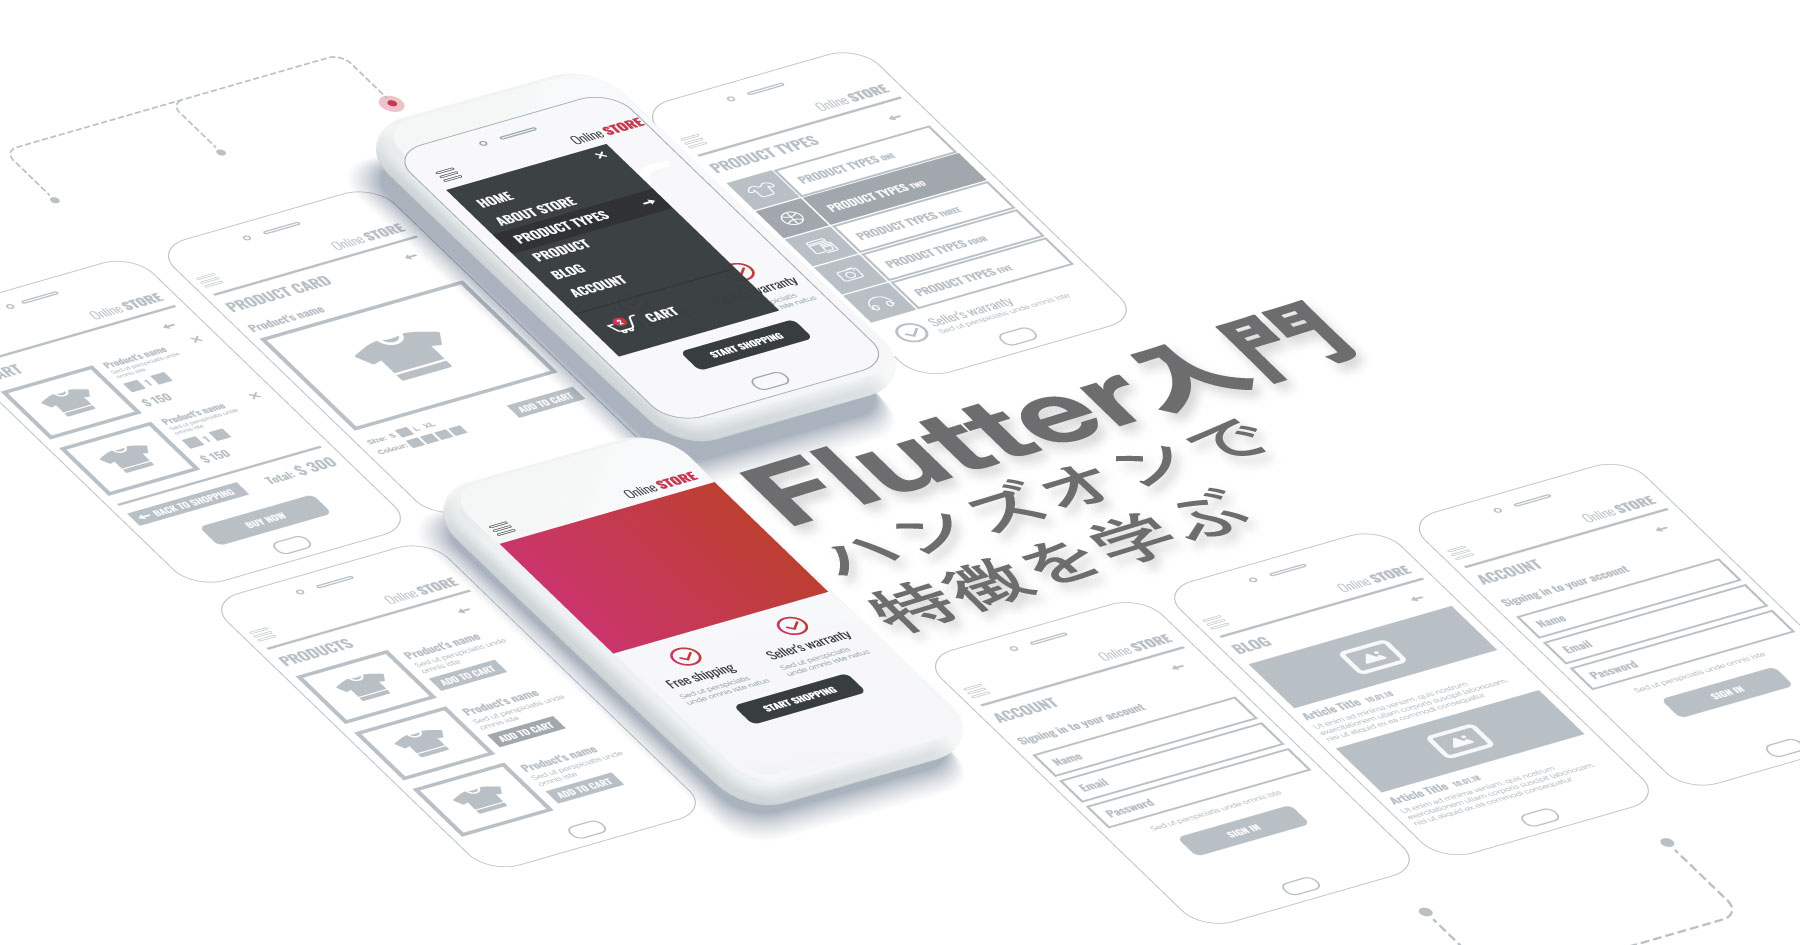 Flutter入門 - 簡単なアプリを作ってUI宣言やホットリロードなど便利機能の使い方を理解しよう